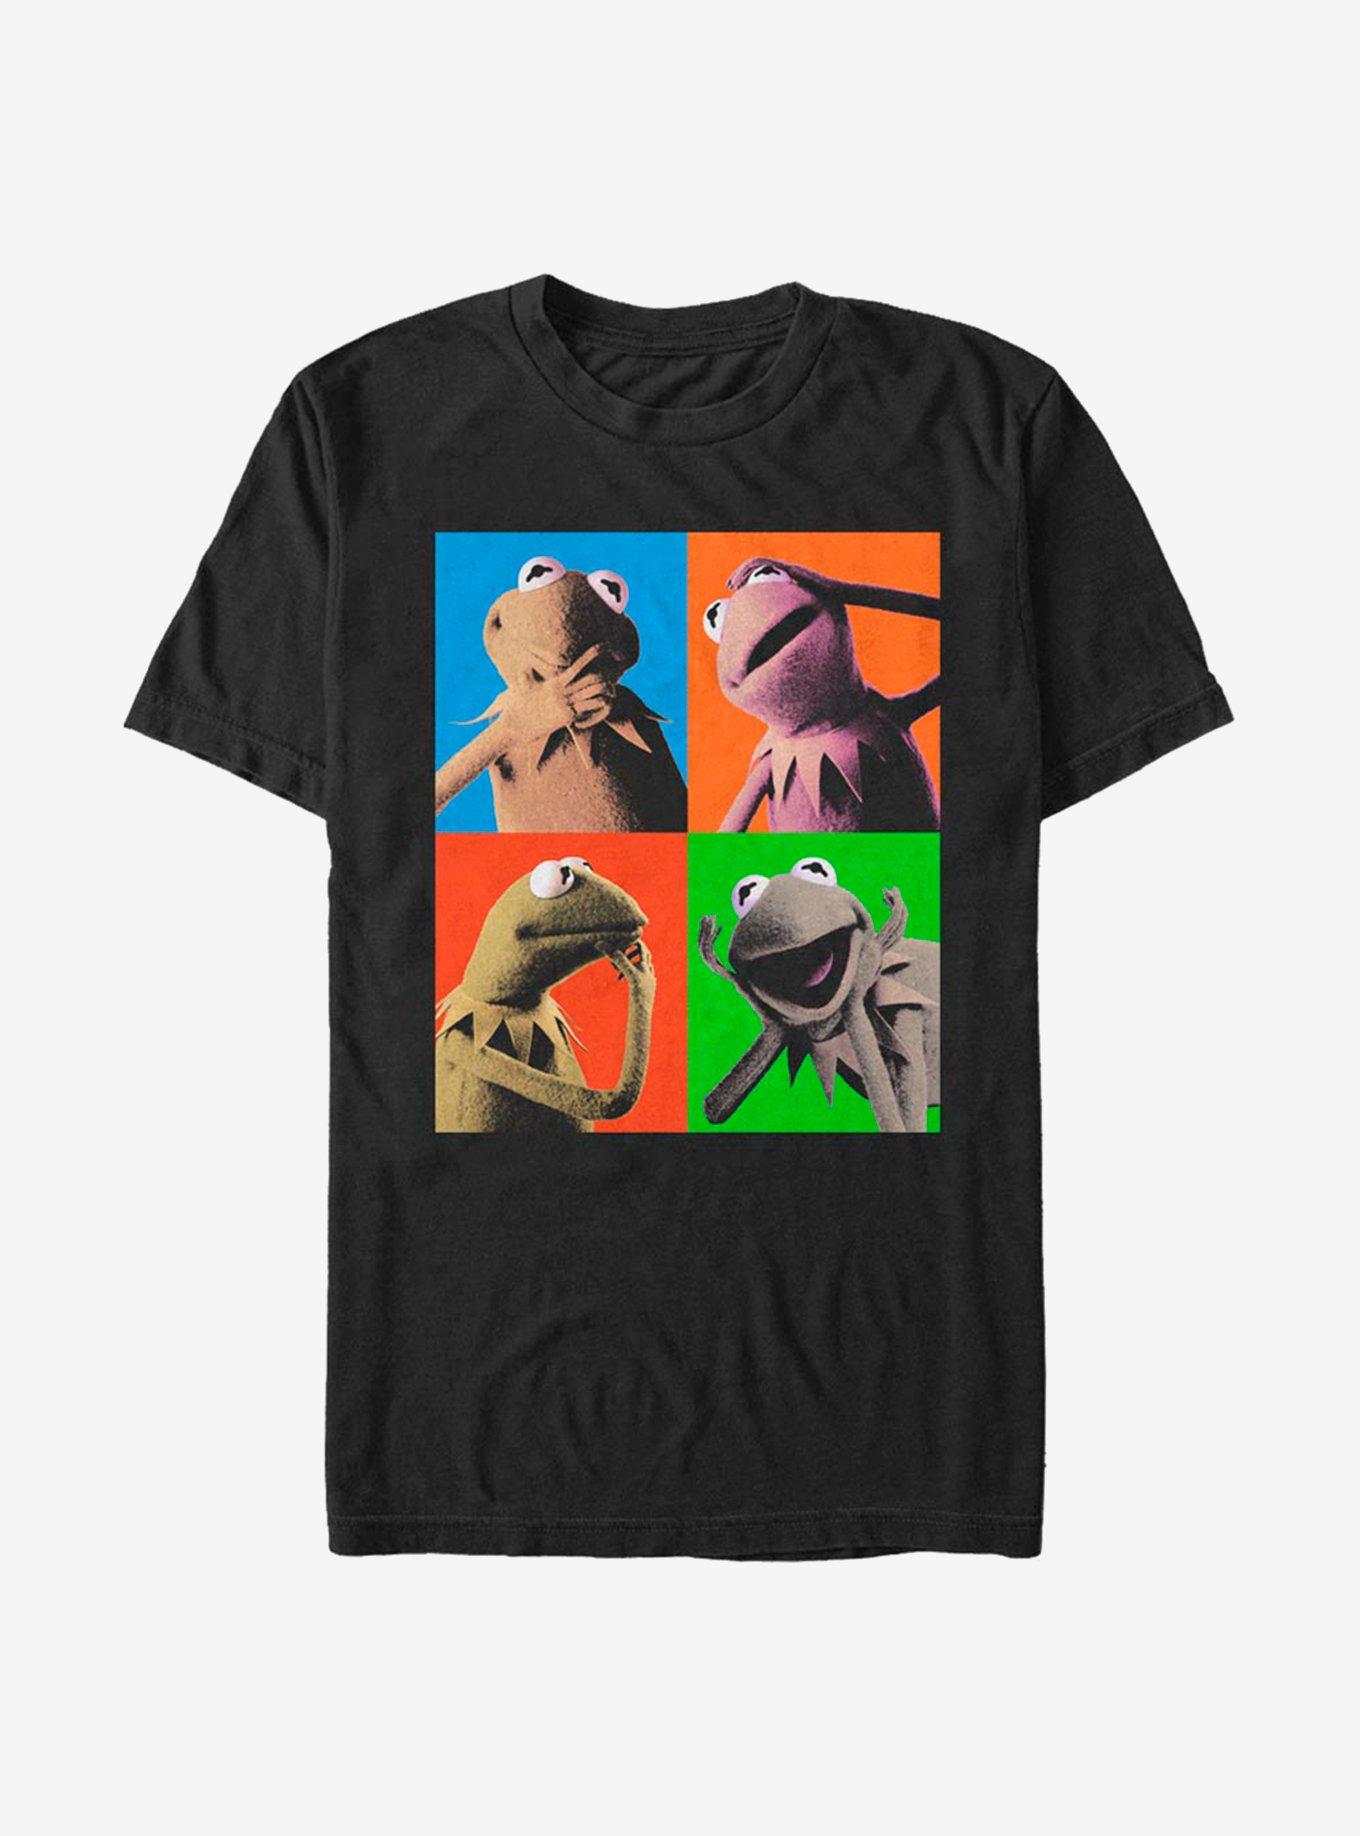 Disney The Muppets Kermit Pop T-Shirt